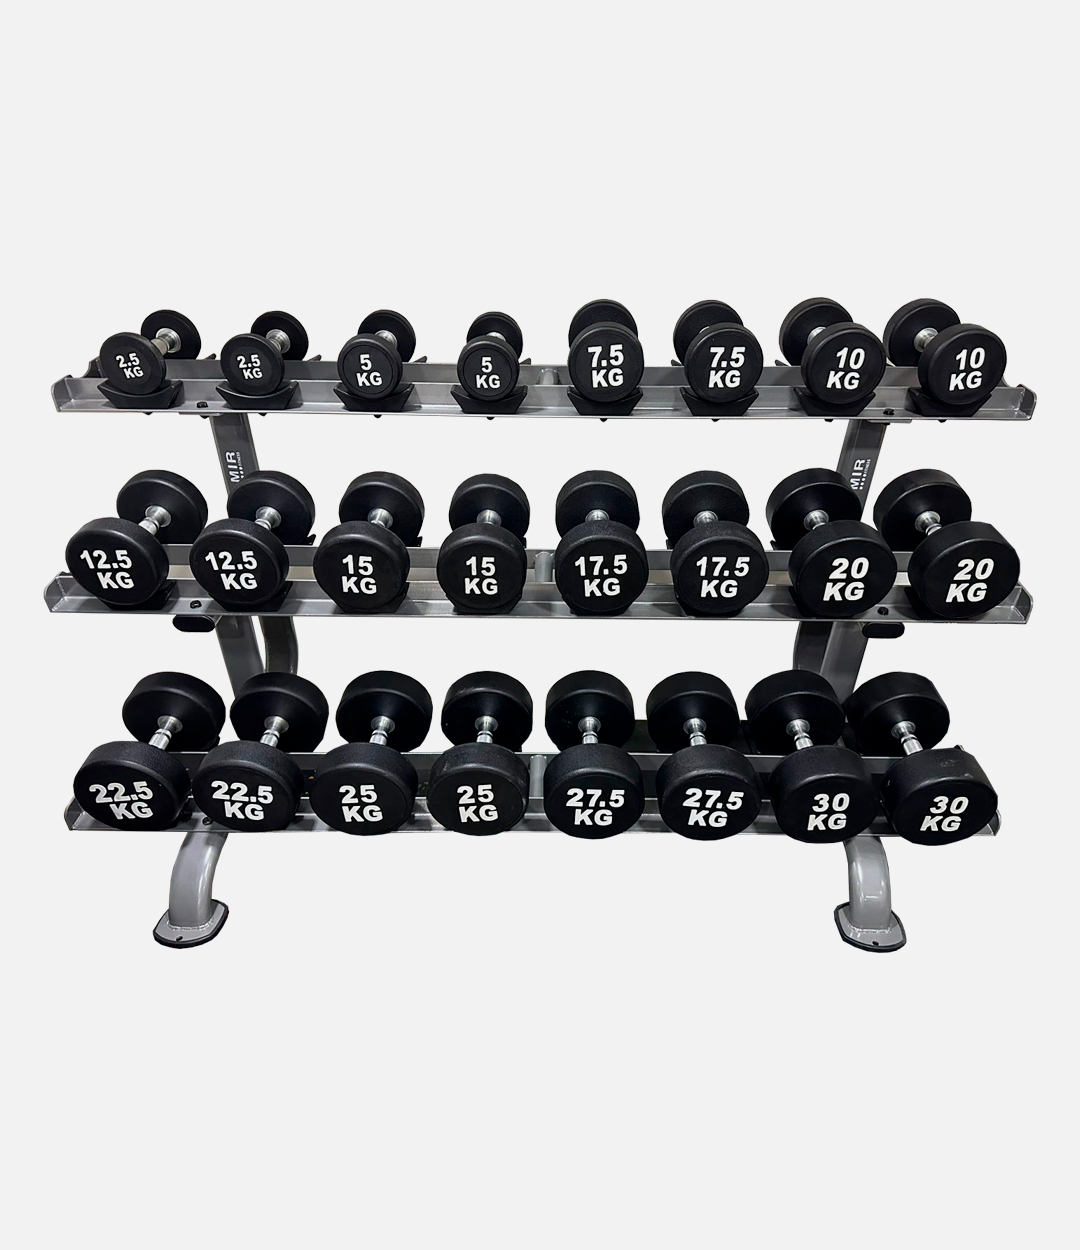 Set de mancuernas de goma redondas sin logo de 2,5kg a 30kg. Total 390kg  (12 pares) – MIR Fitness